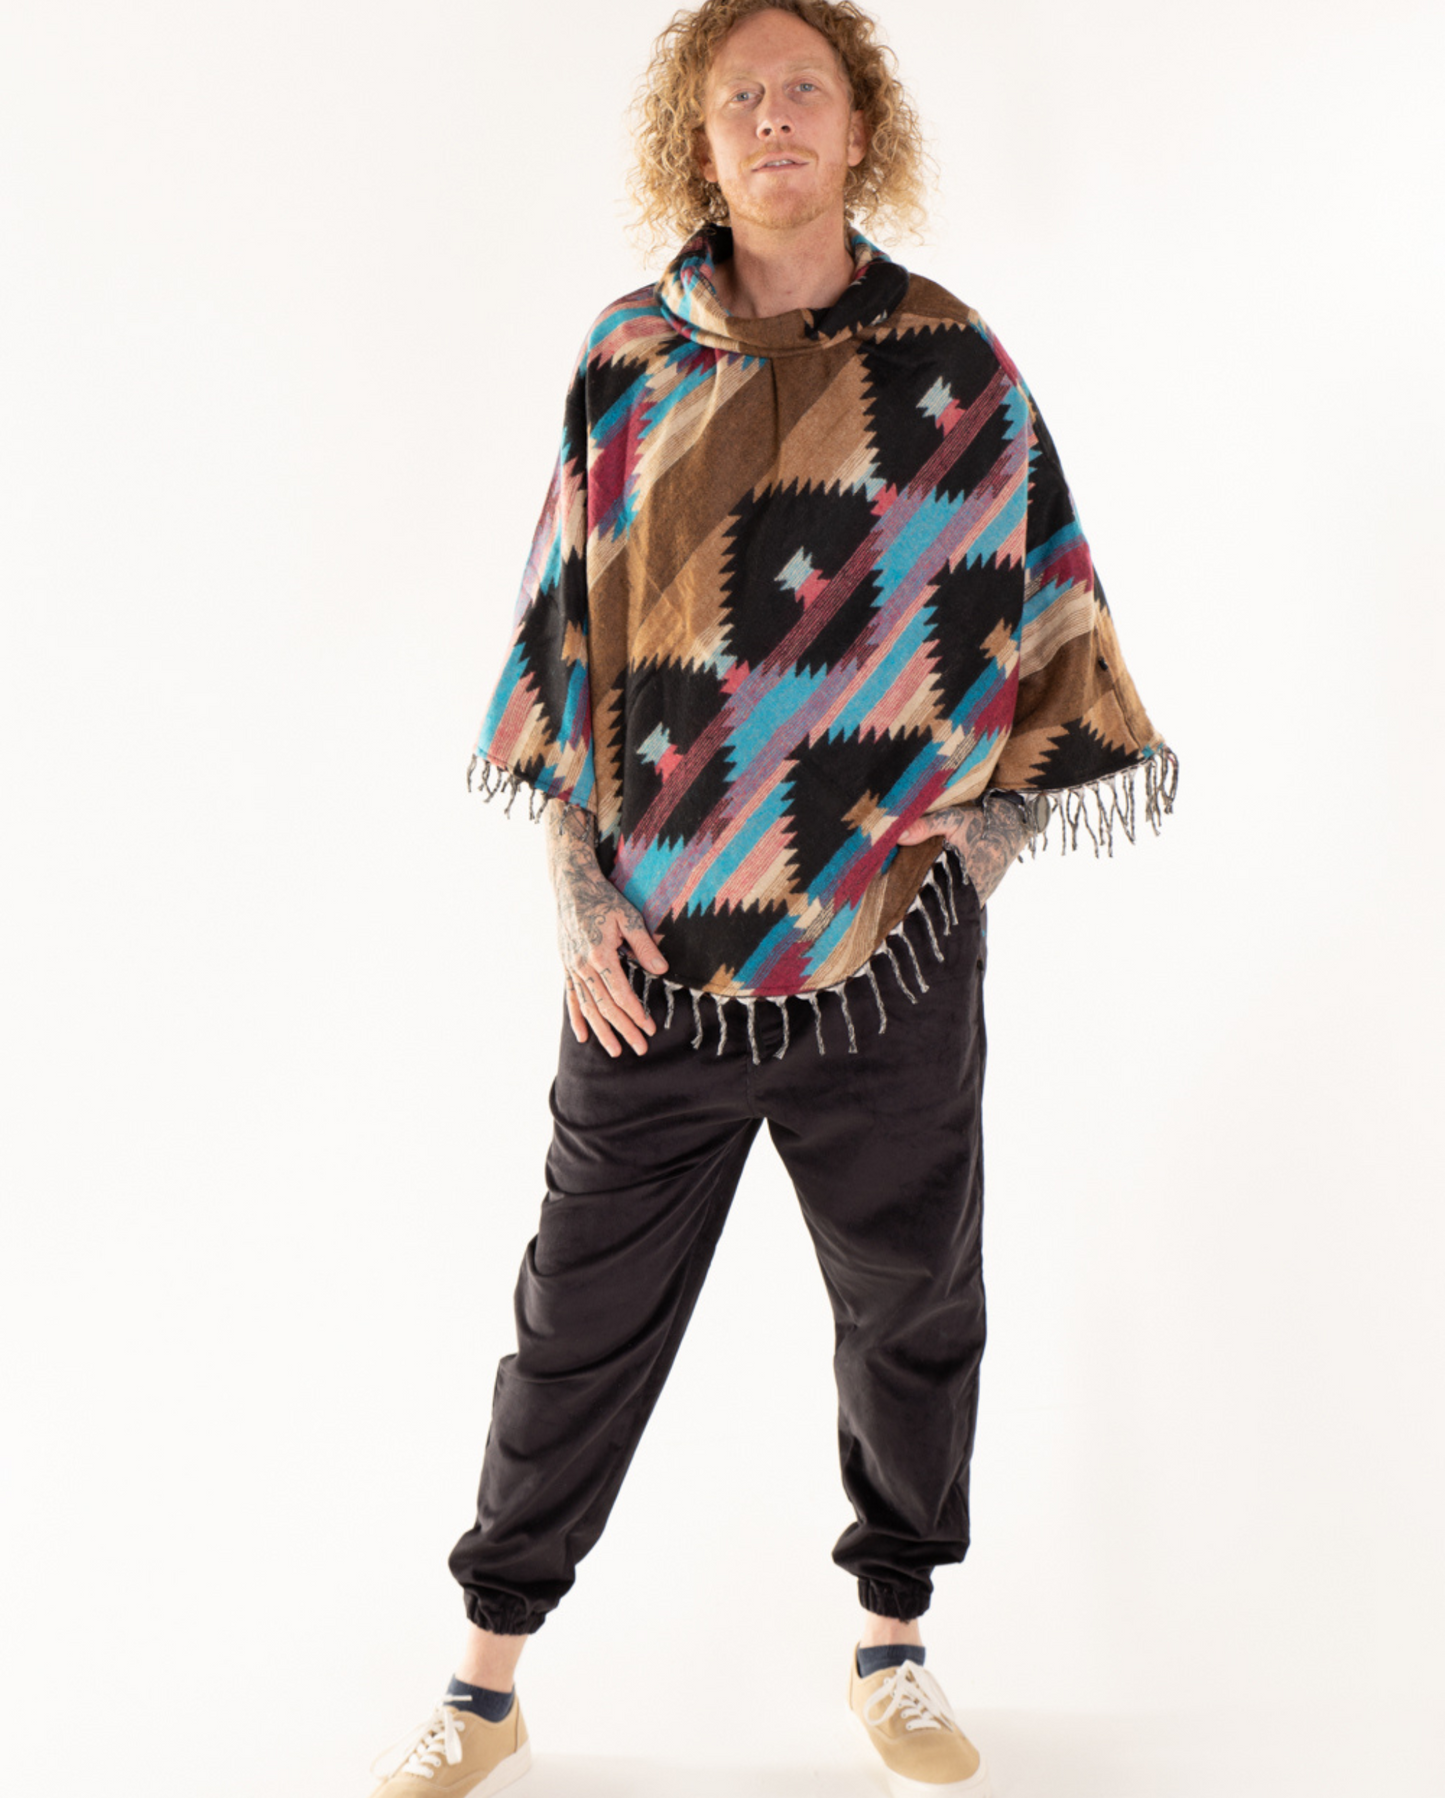 Vegan "Wool" Cowl Neck Poncho - Aztec Patterns